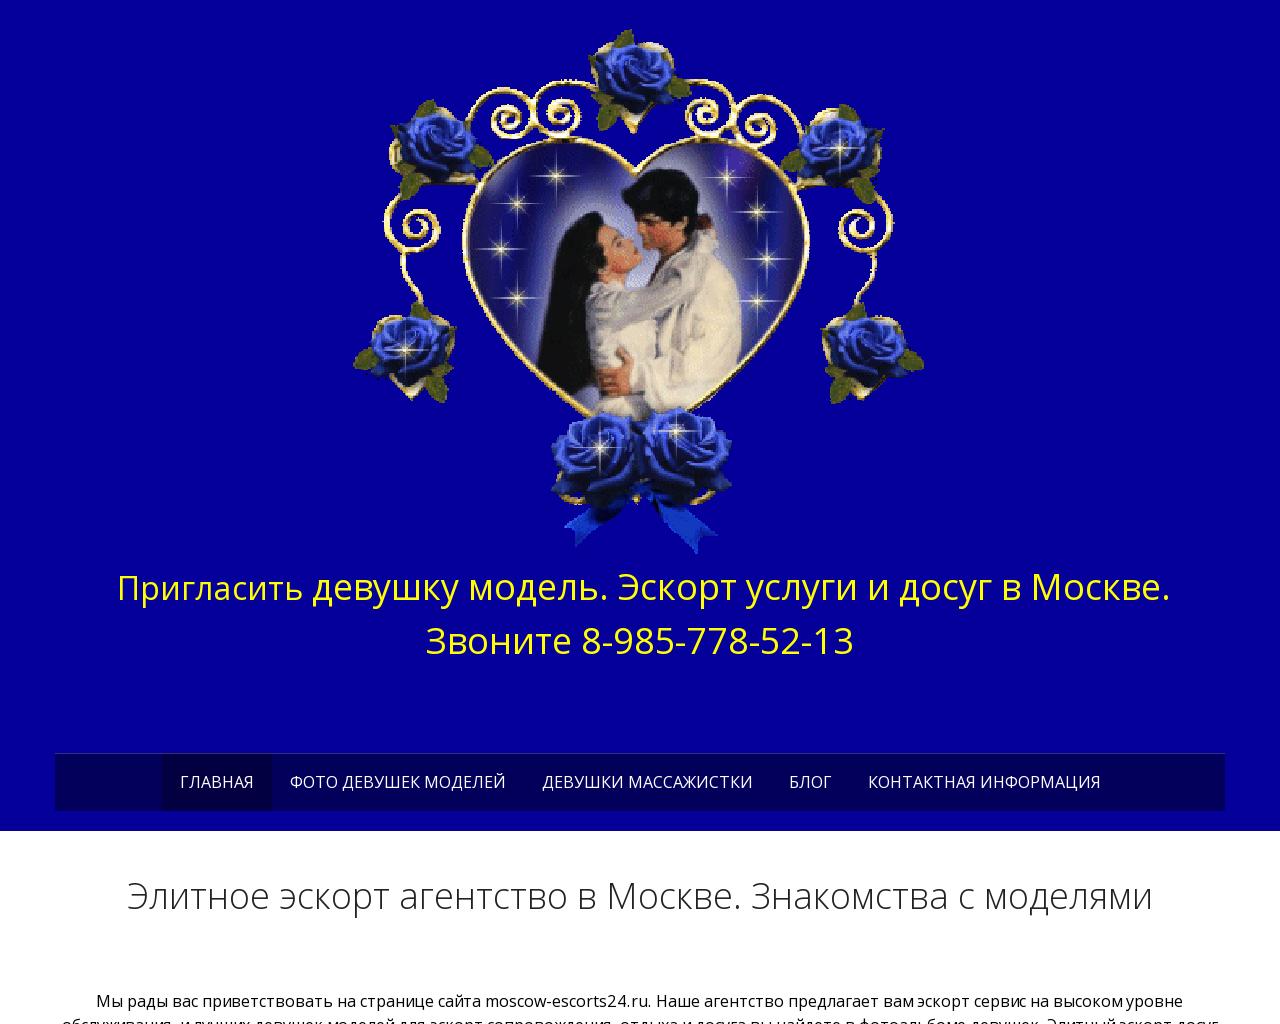 Изображение сайта moscow-escorts24.ru в разрешении 1280x1024